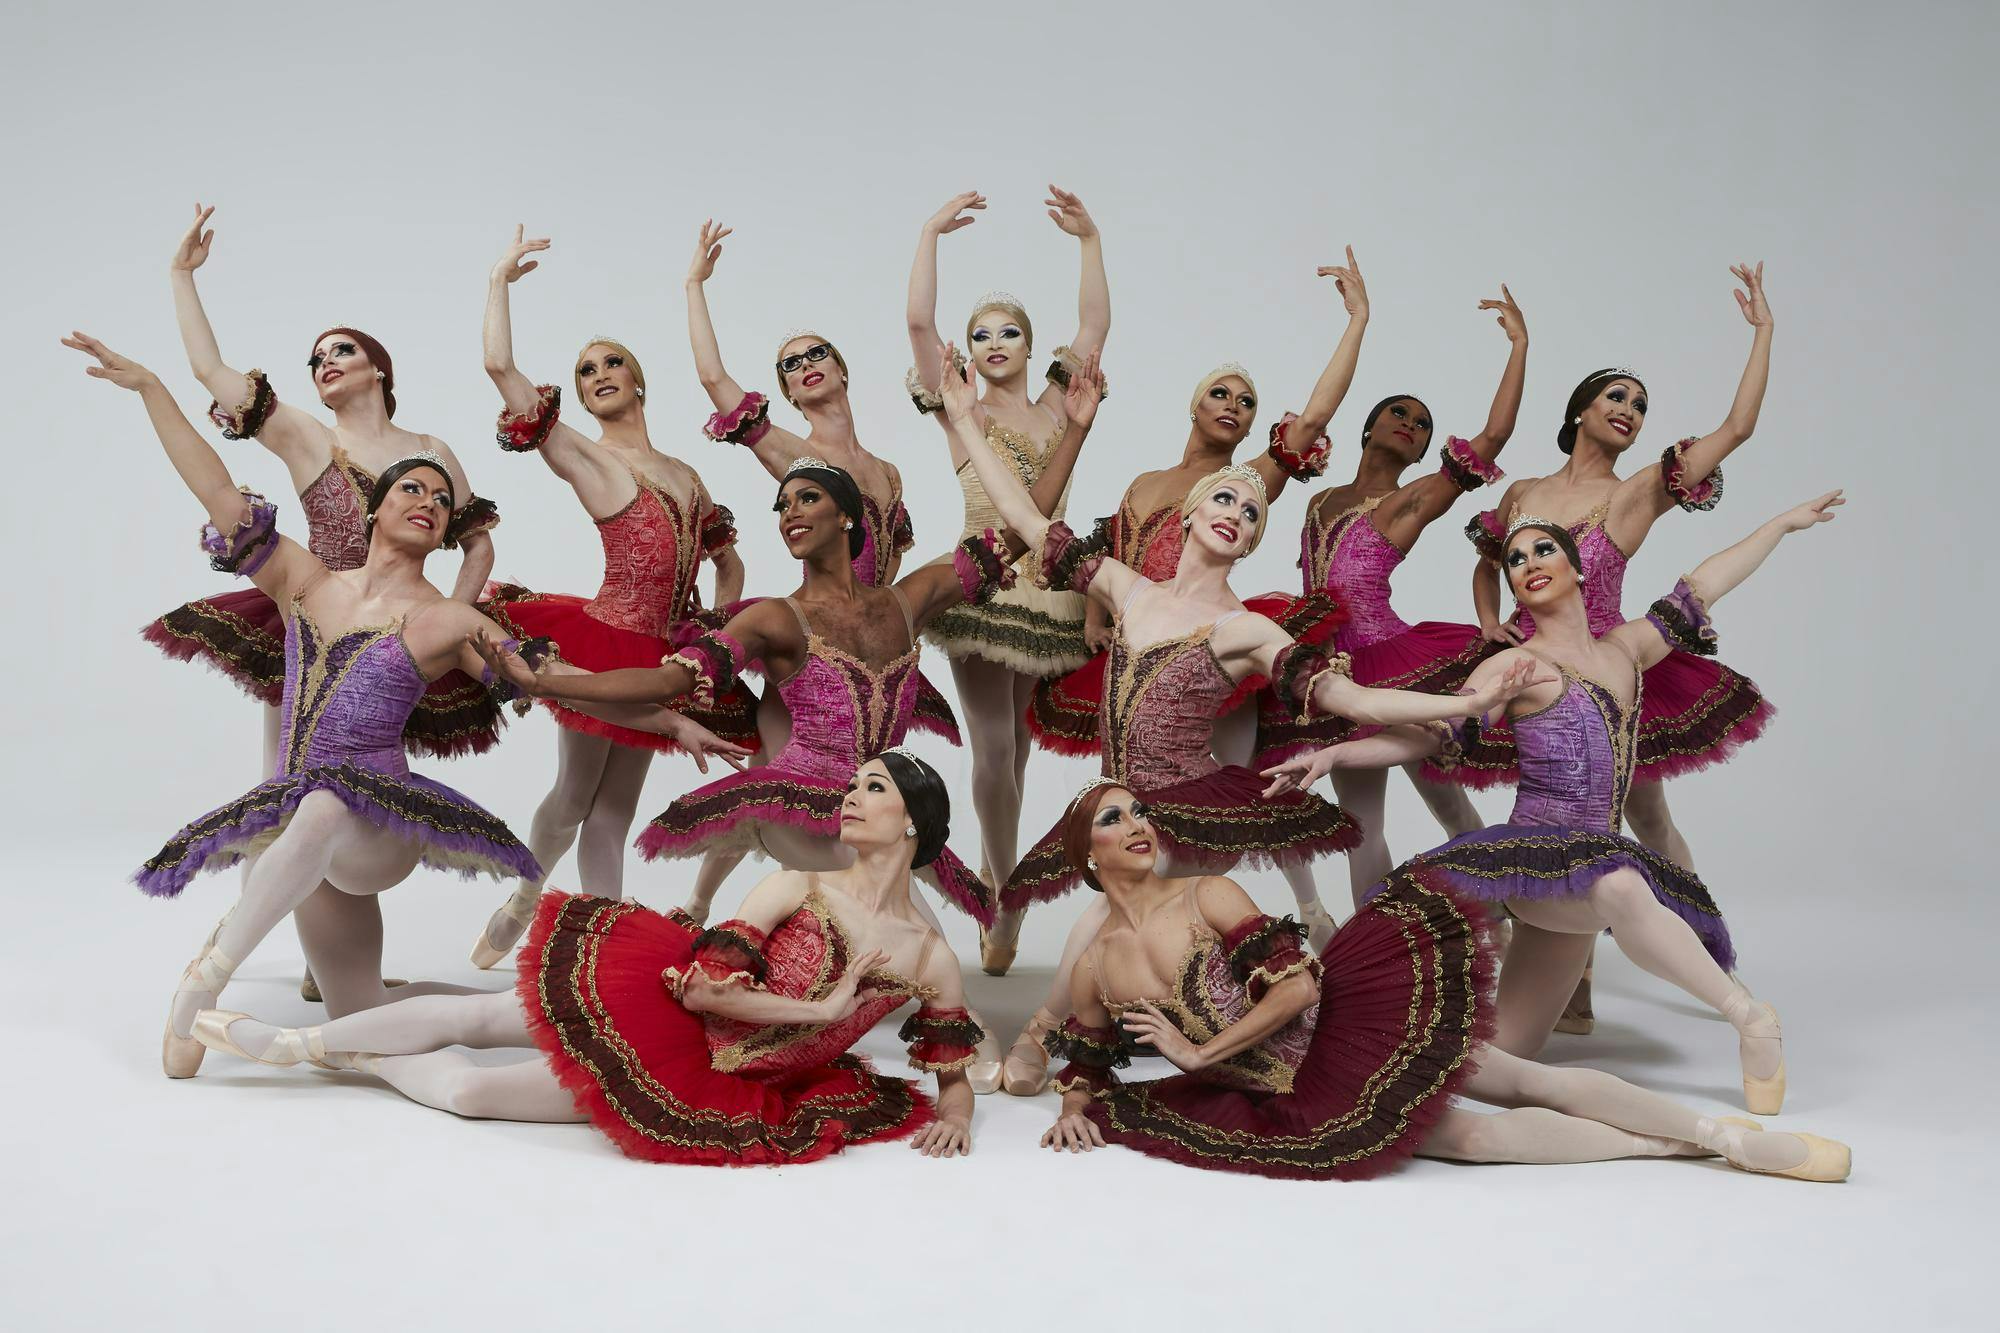 Les Ballets Trockadero de Monte Carlo' to perform at IU Auditorium Feb. 24  - Indiana Daily Student